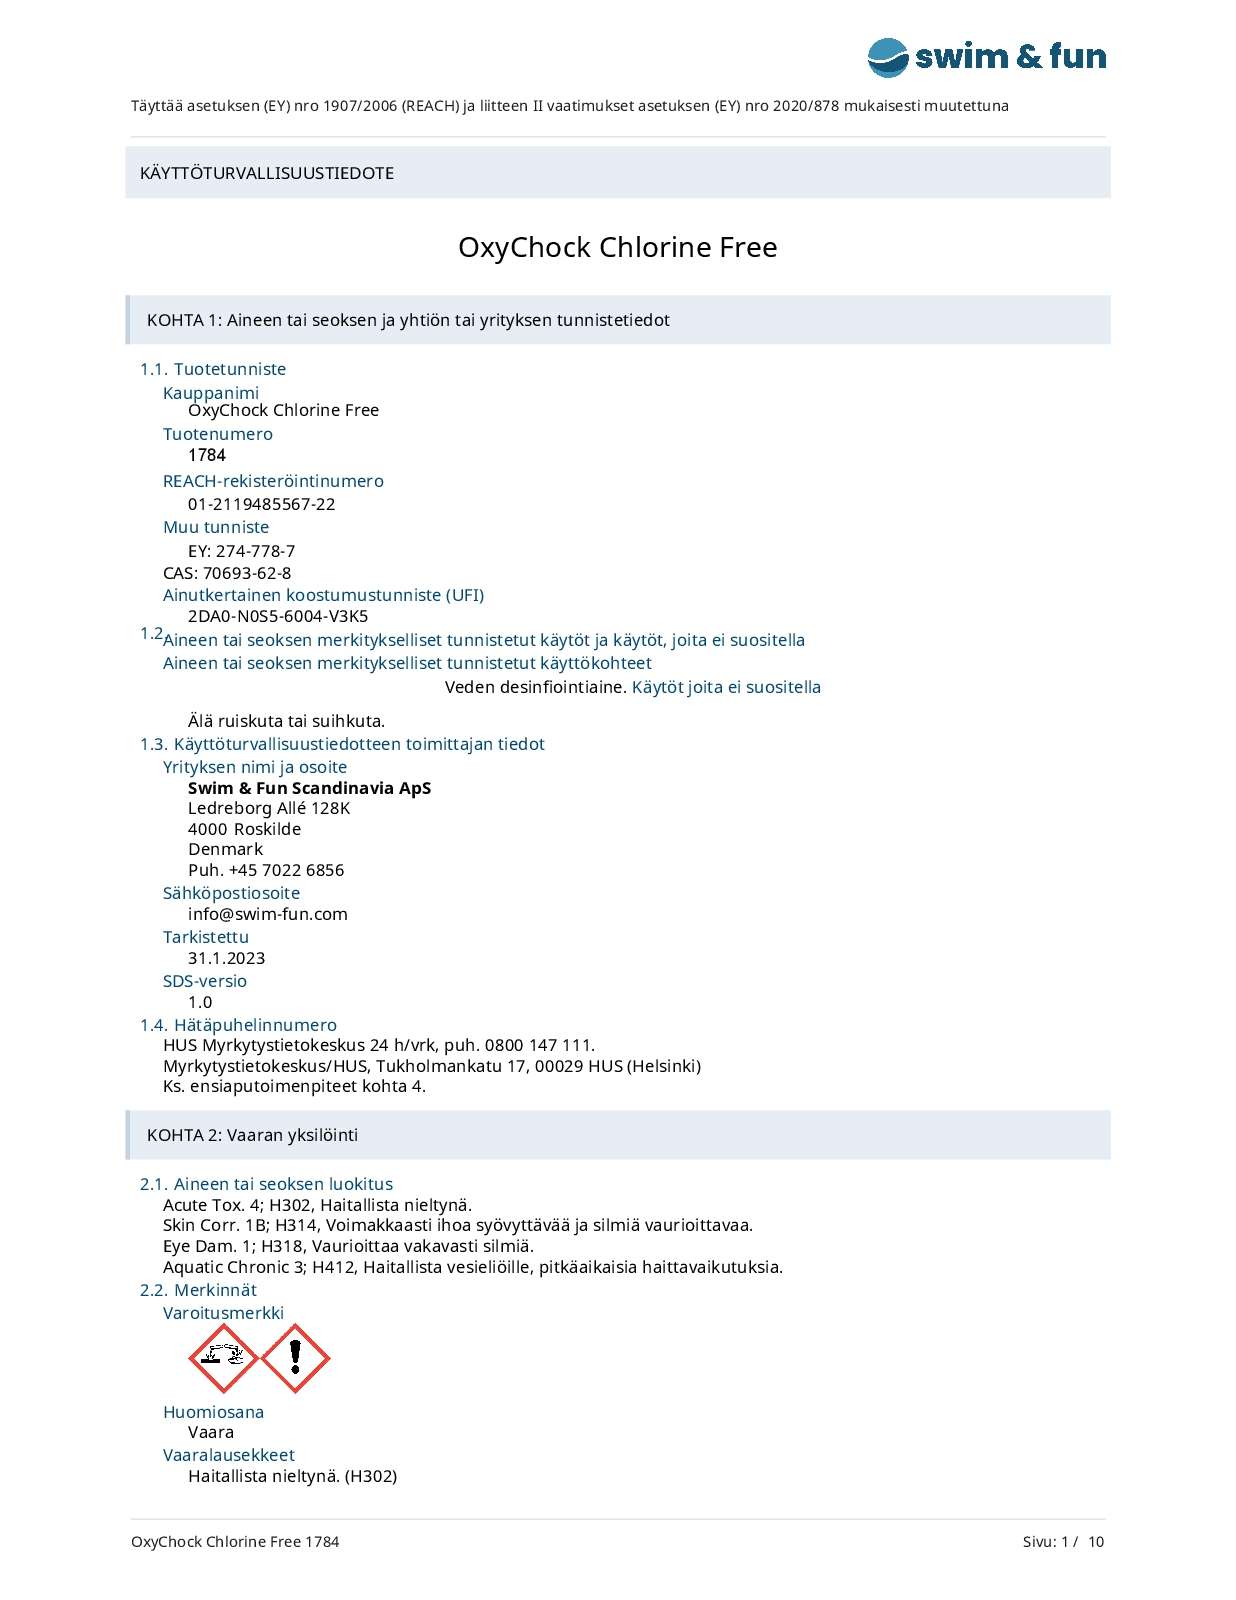 OxyChock Chlorine Free 1784